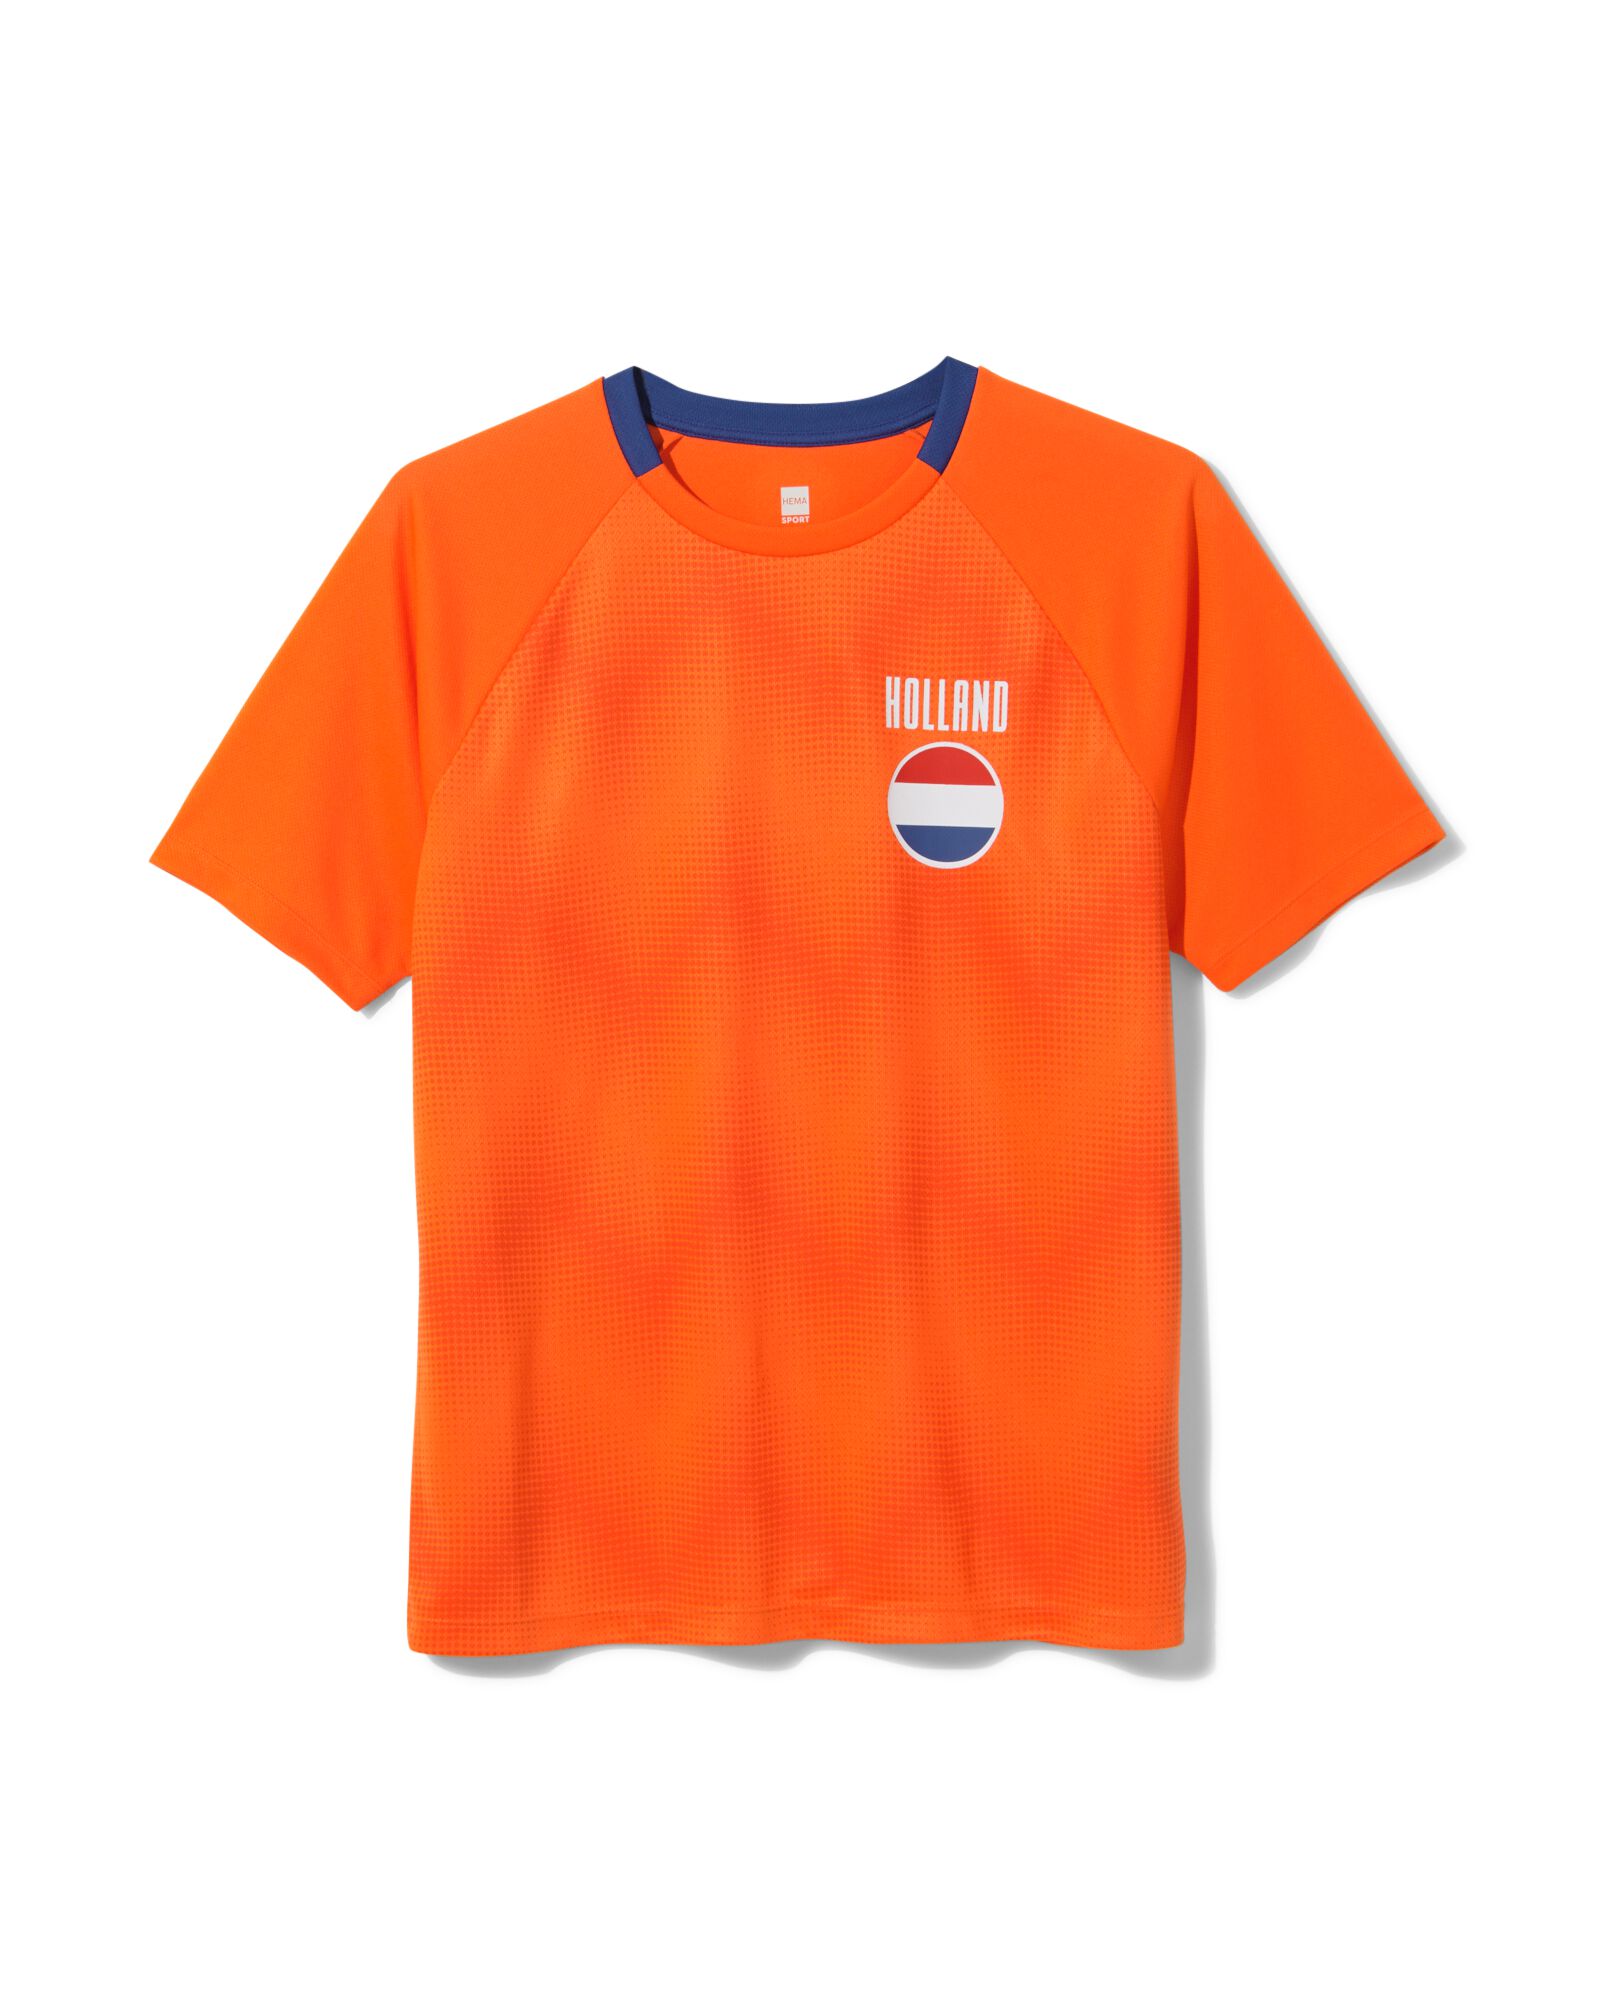 sportshirt voor volwassenen Nederland oranje L - 36030577 - HEMA